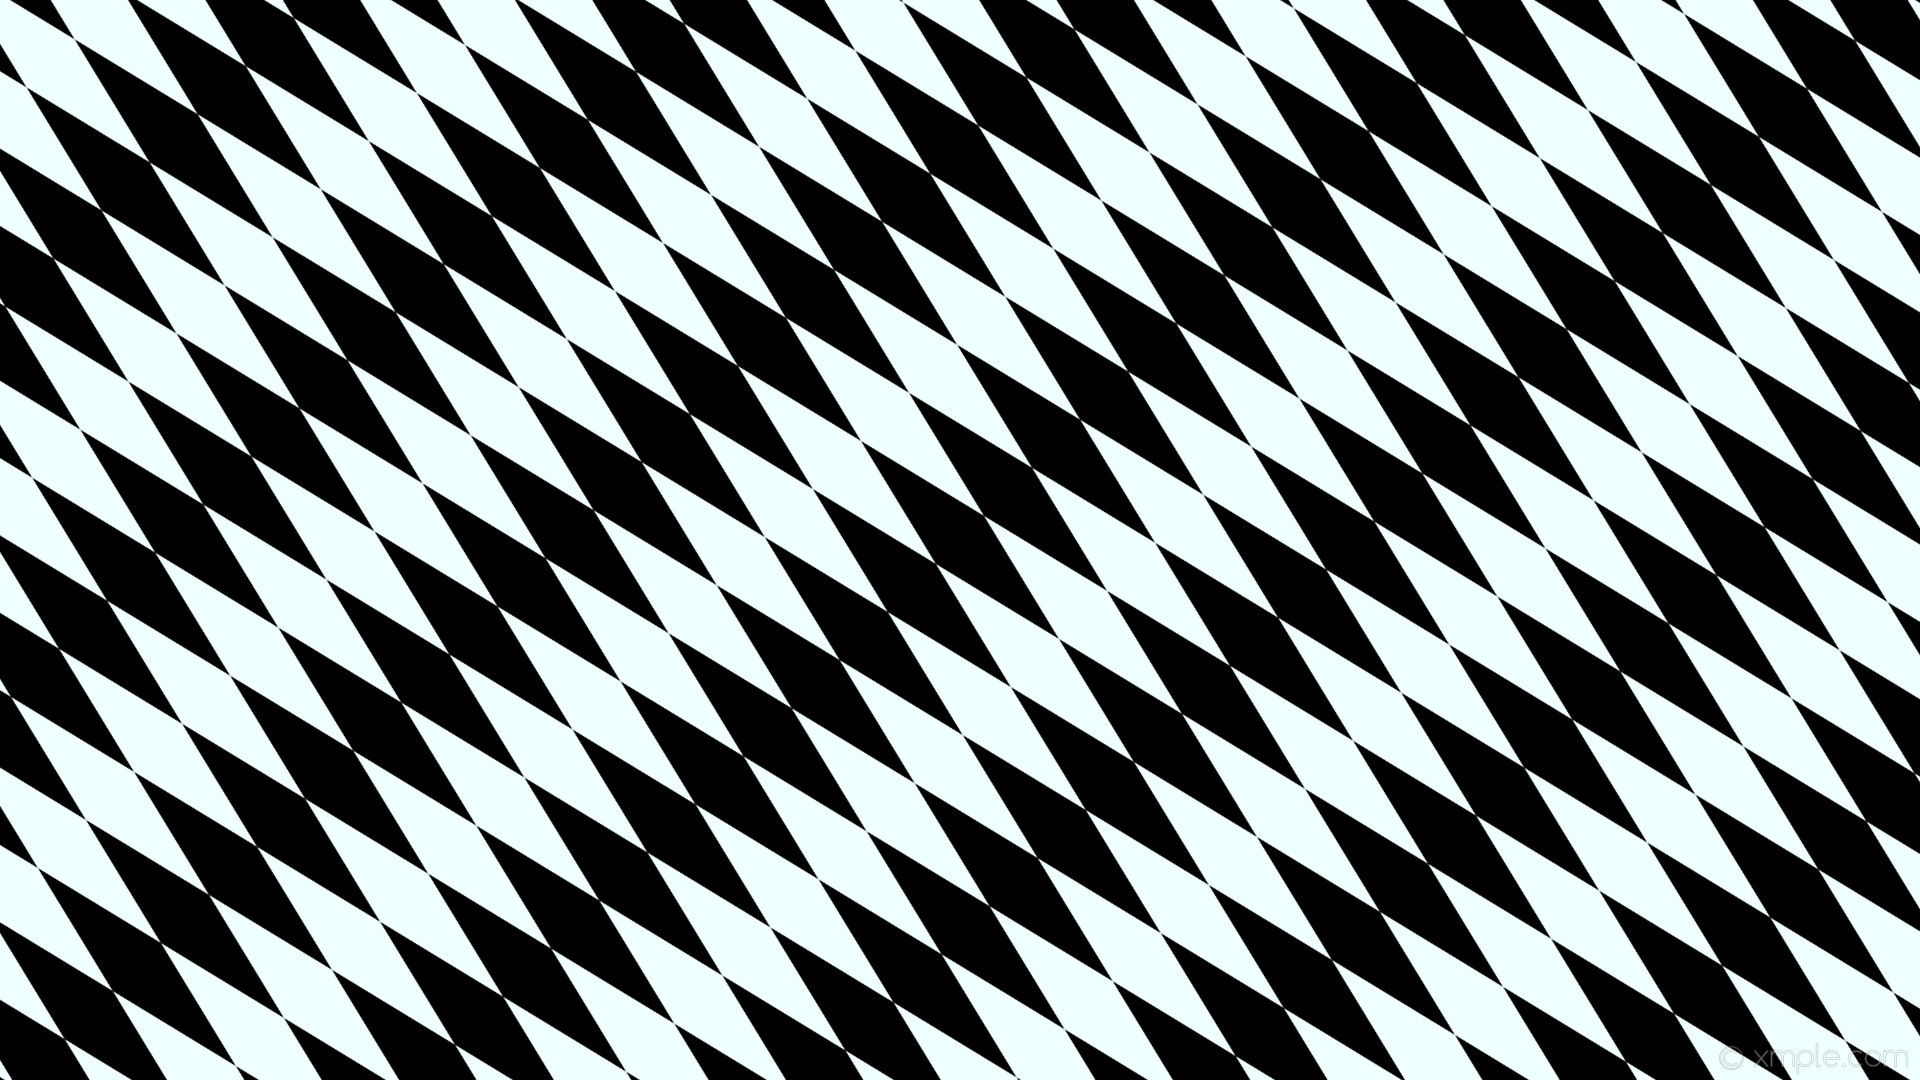 1920x1080 wallpaper lozenge black rhombus white diamond azure #000000 #f0ffff 135Â°  280px 68px